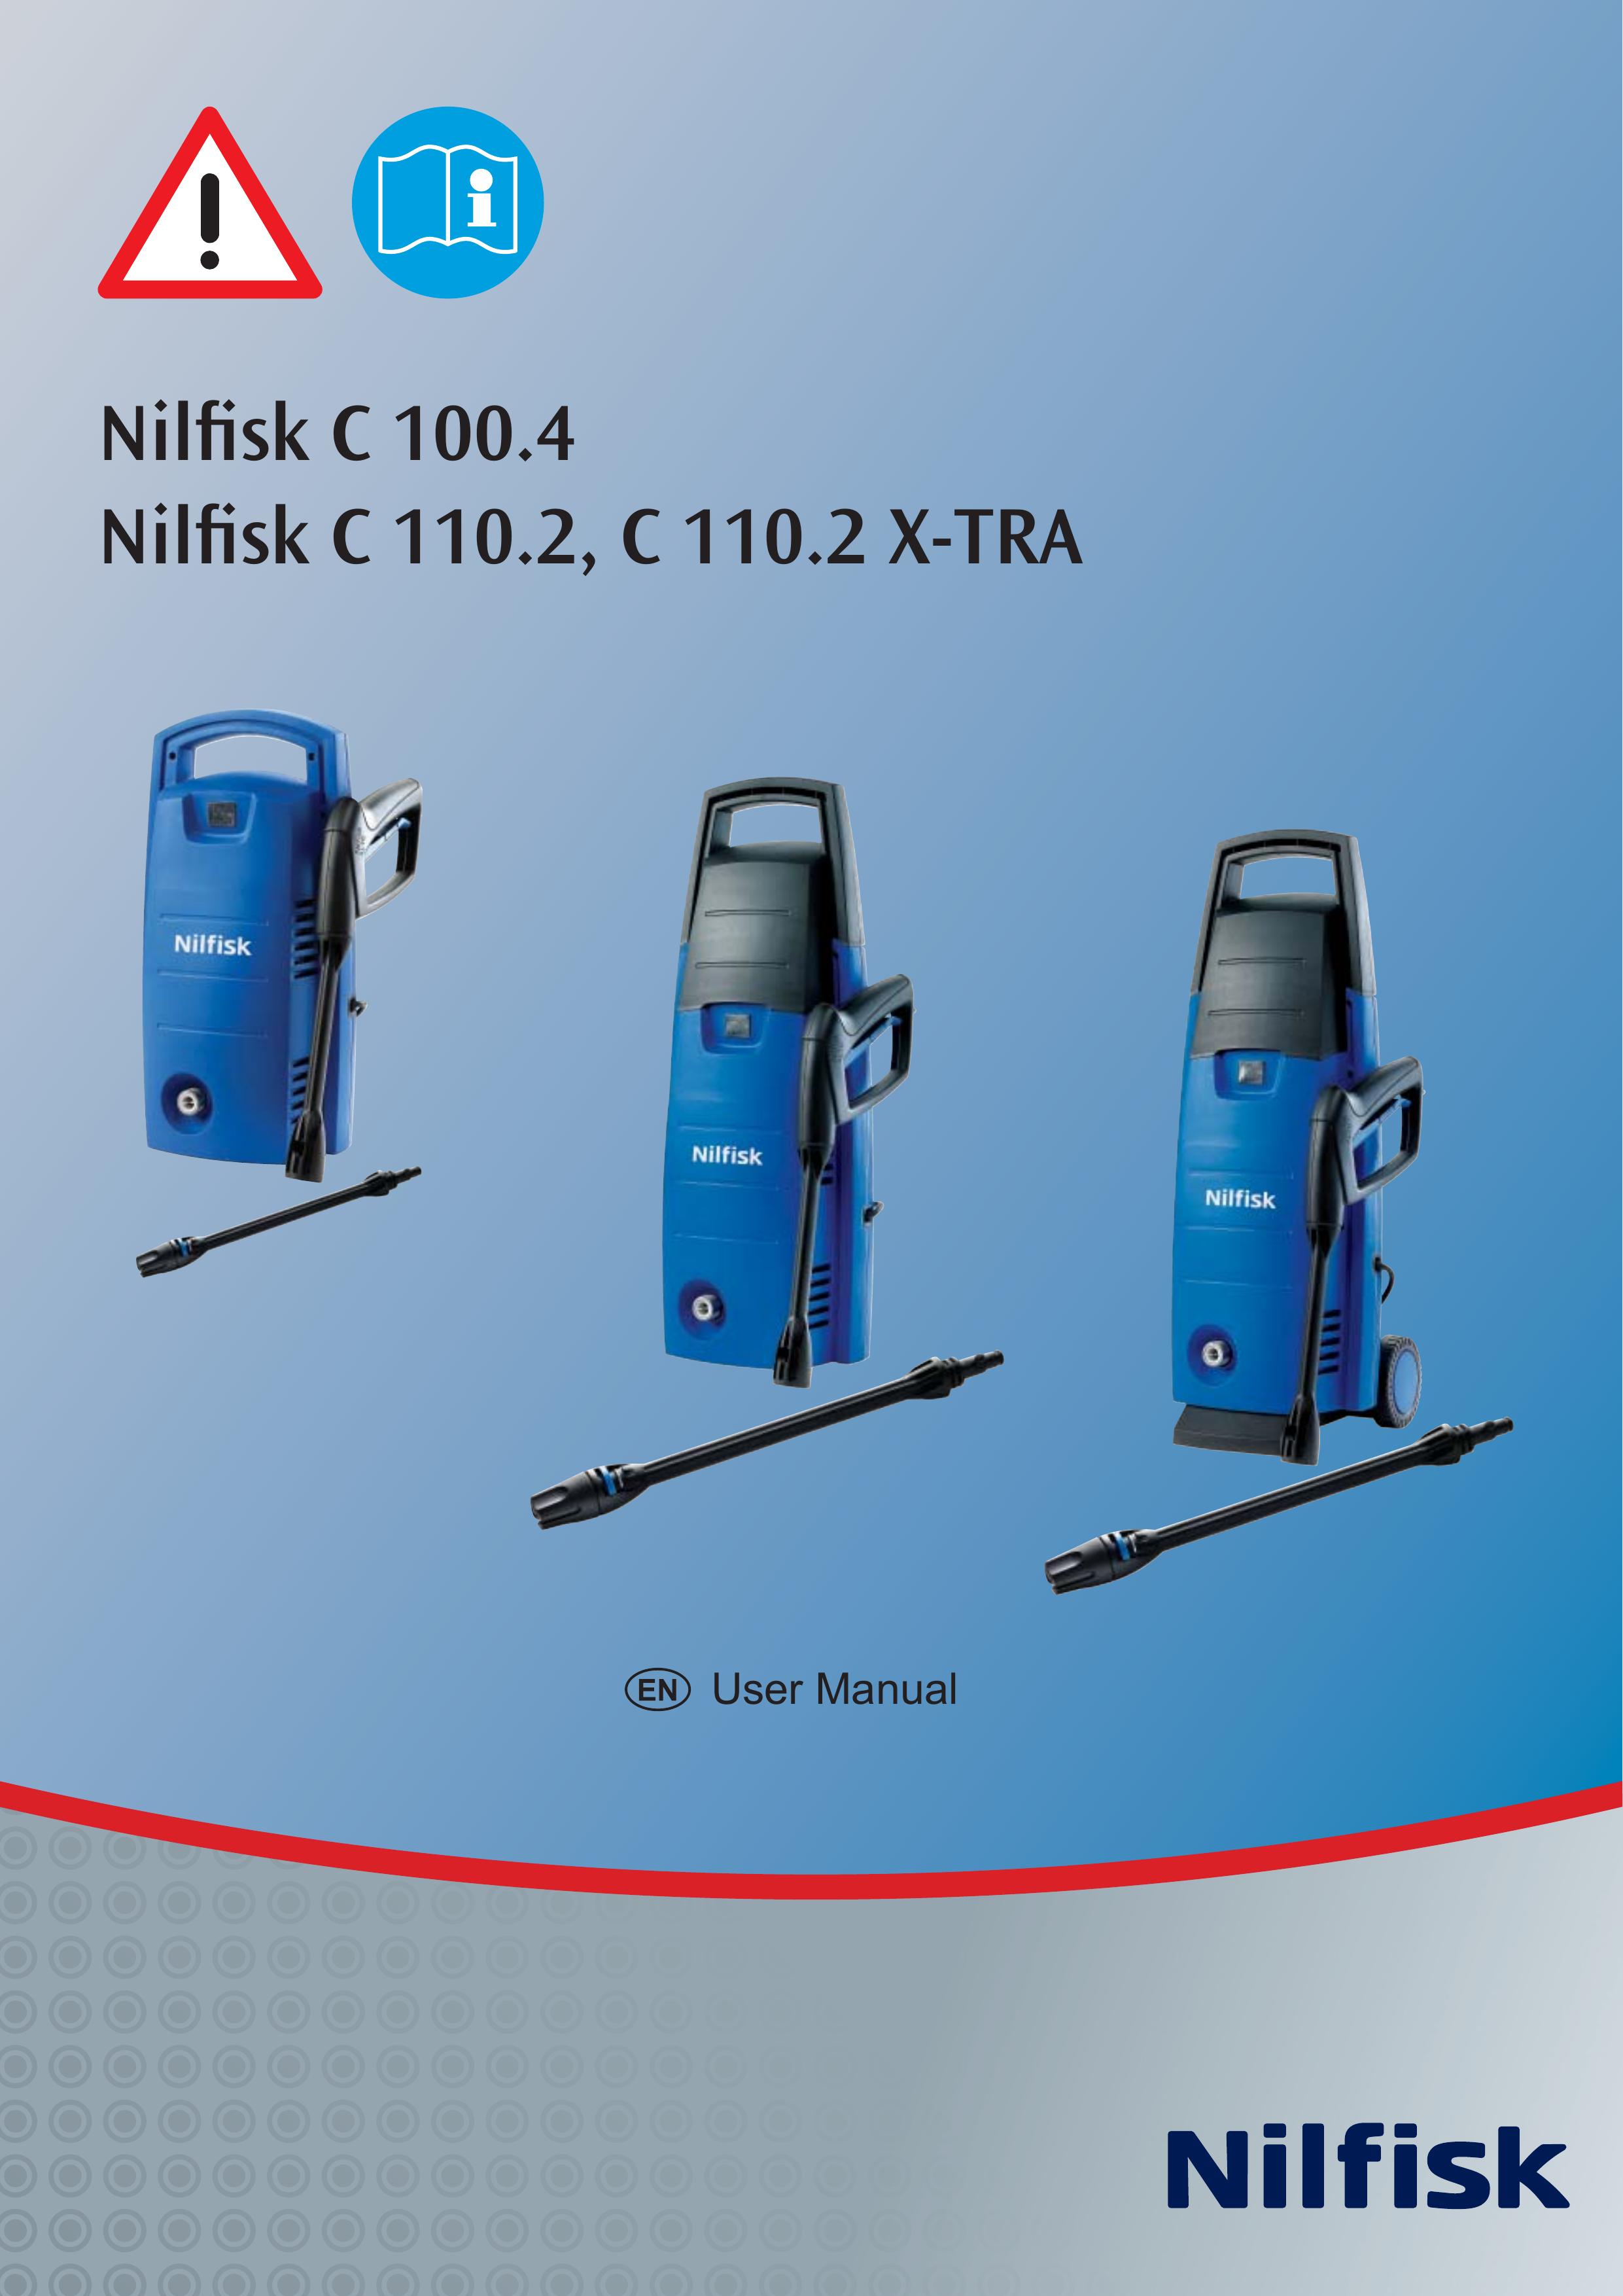 Nilfisk-ALTO Nilfisk C 100.4 Pressure Washer User Manual